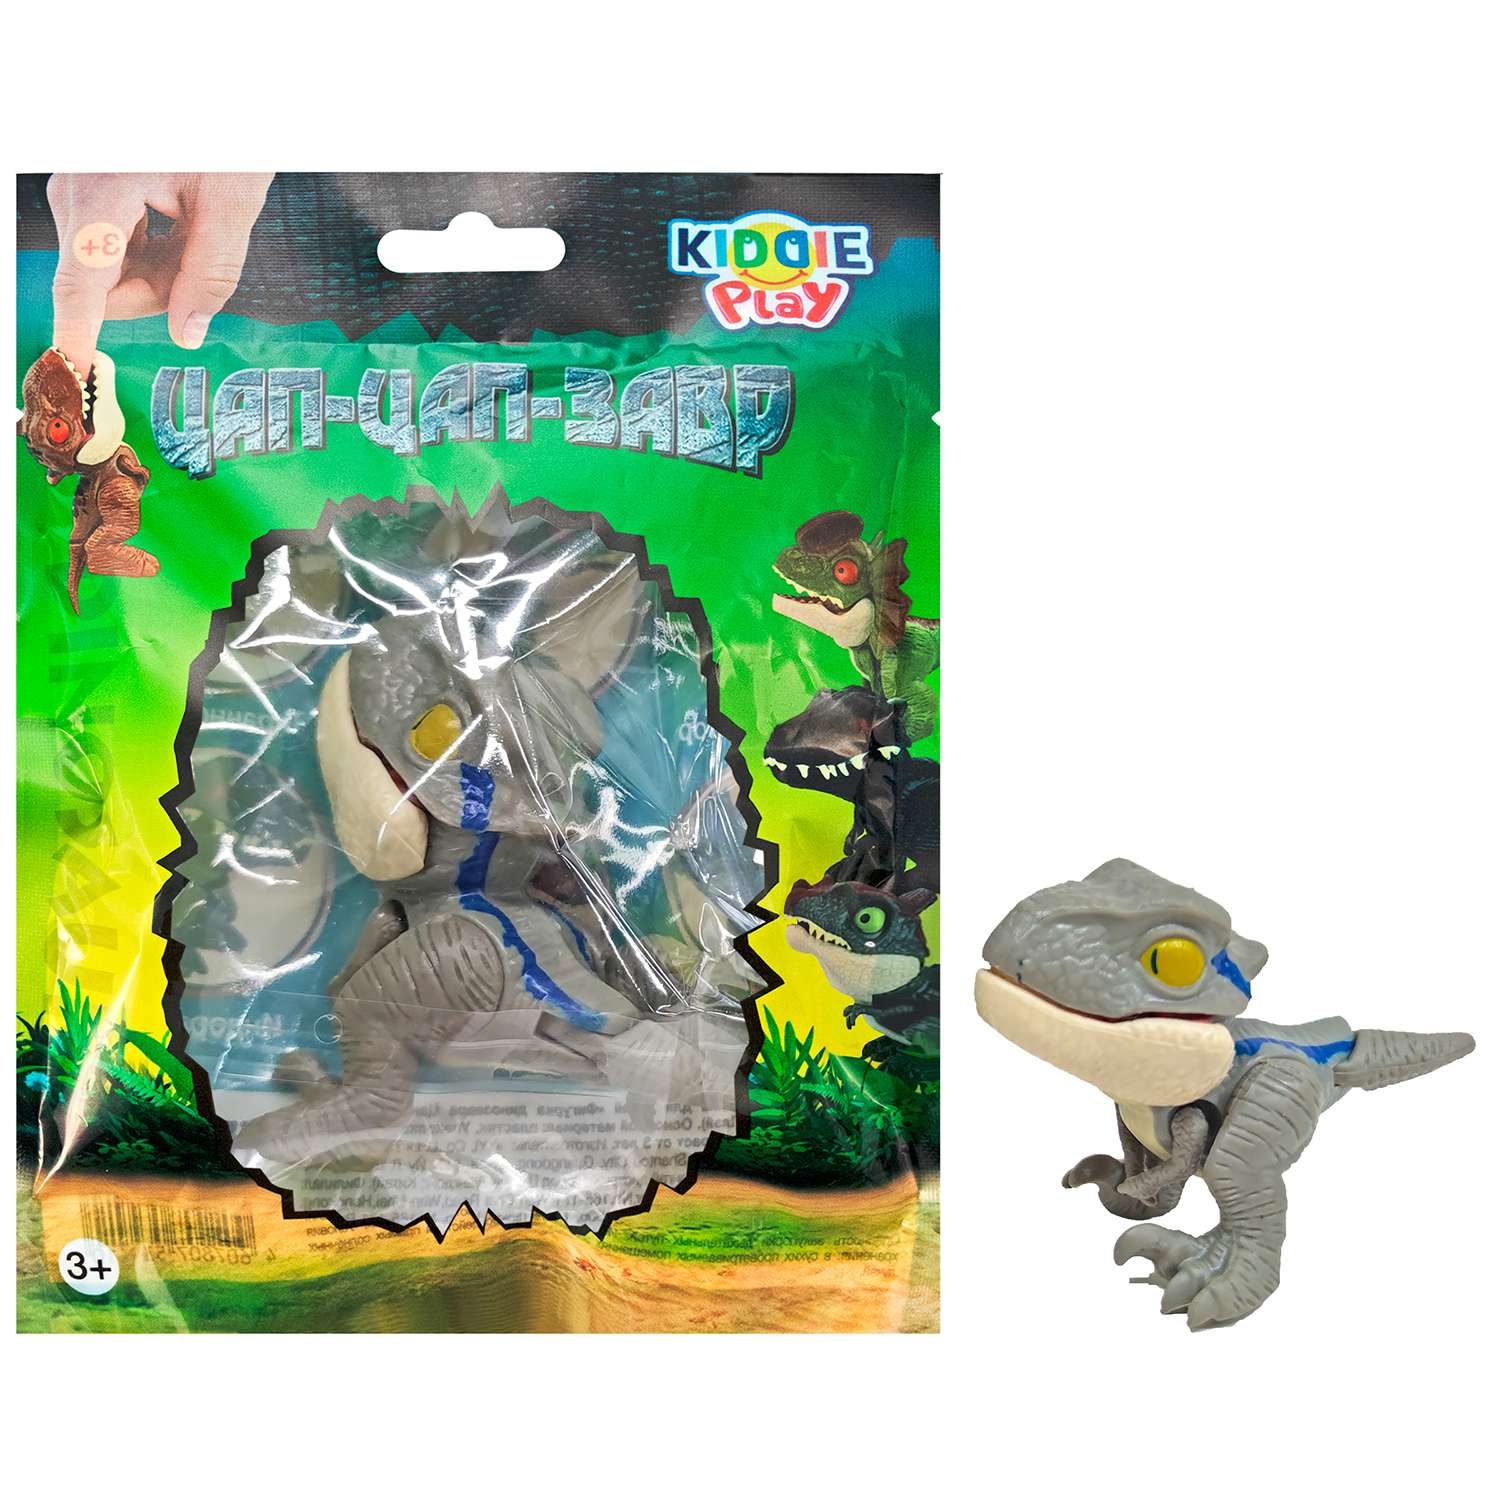 Игрушка KiddiePlay KiddiePlay Фигурка динозавра Цап-Цап-Завр в ассортименте 12605 - фото 8